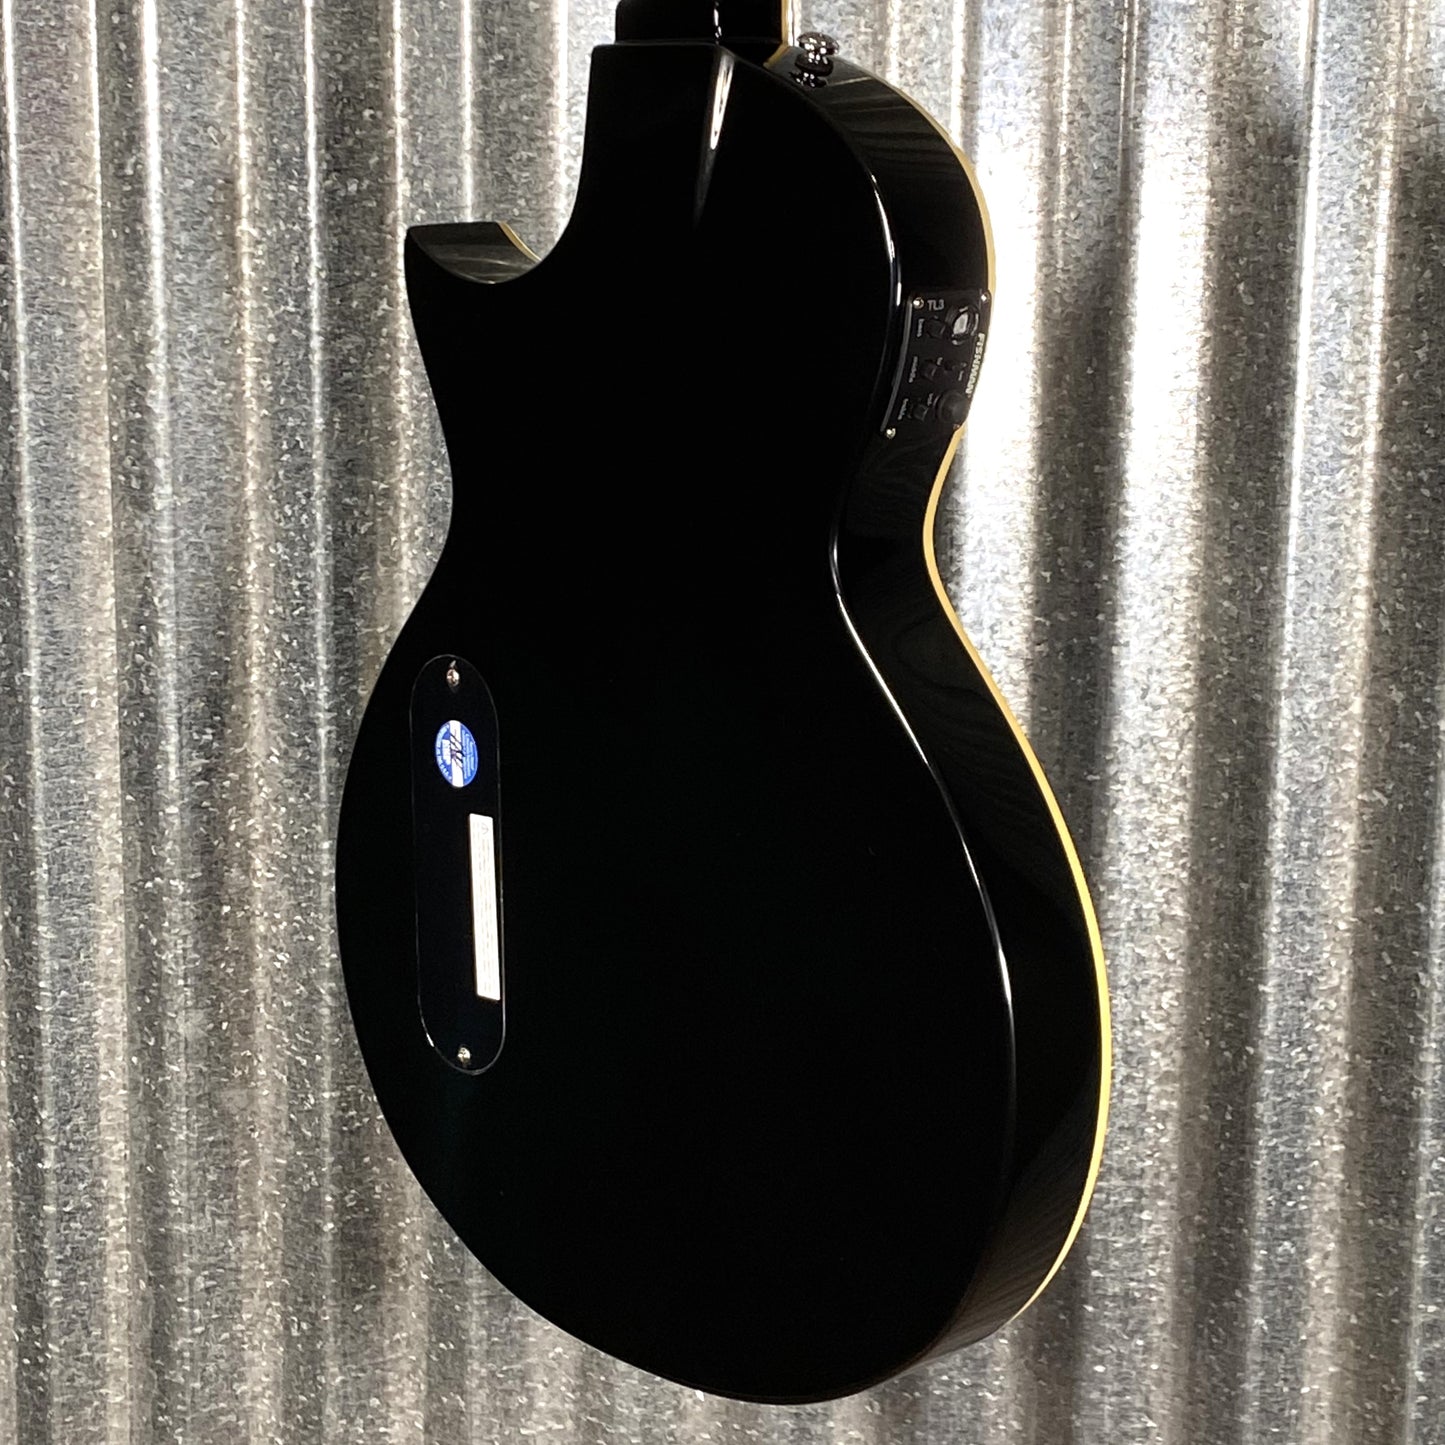 ESP LTD Thinline TL-6 Acoustic Electric Black Guitar LTL6BLK #0187 Used